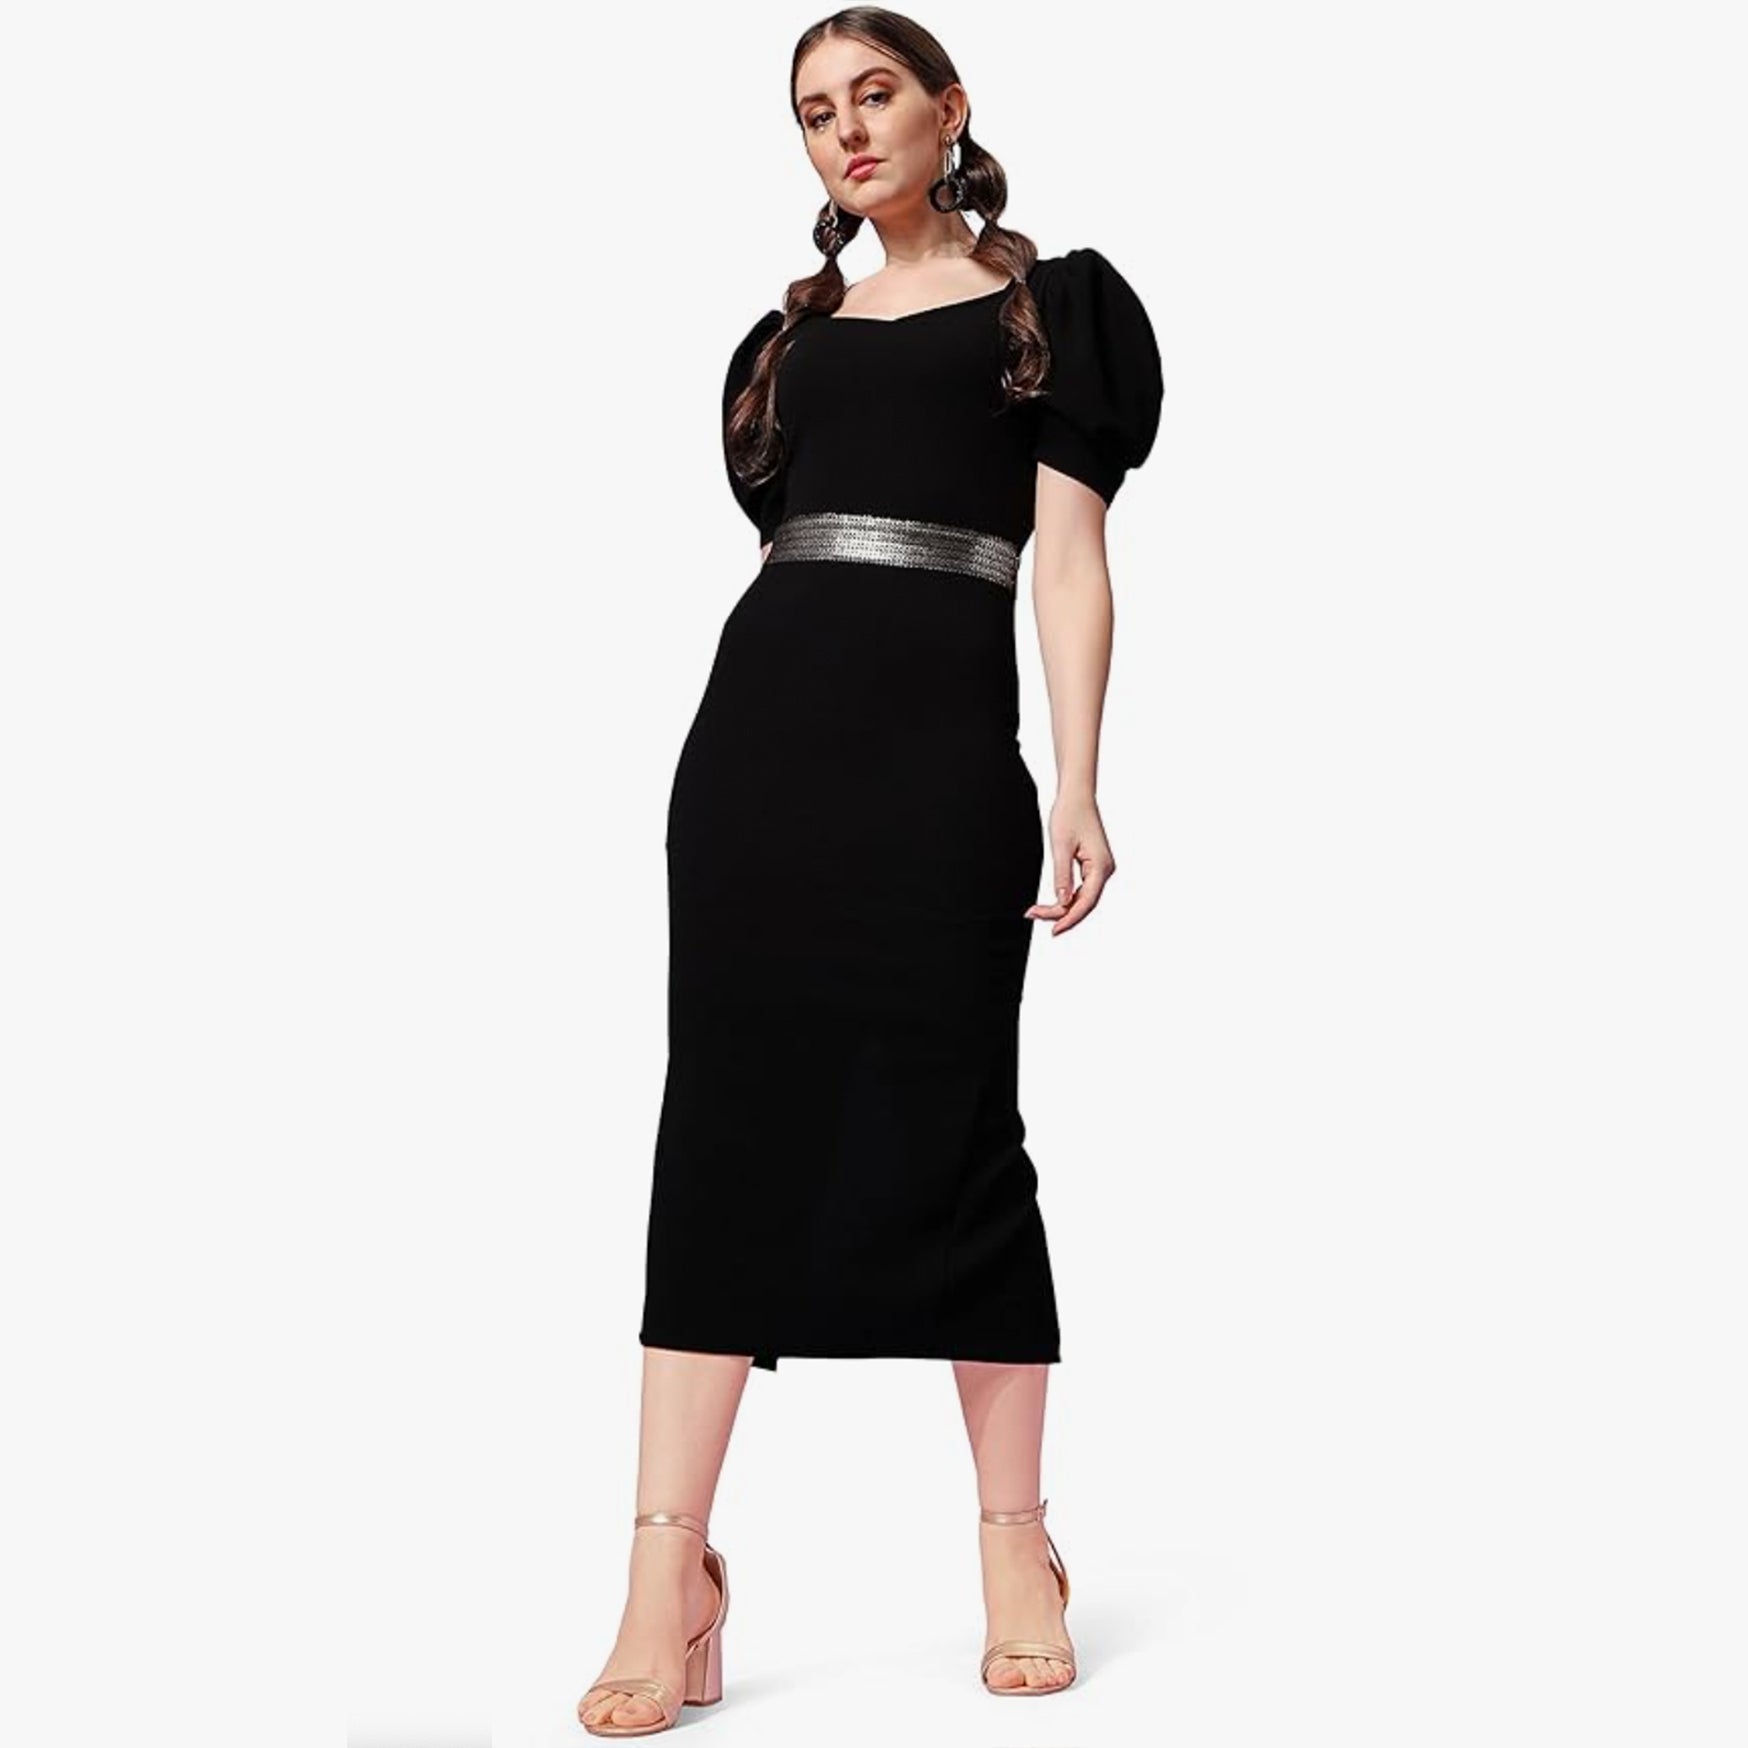 Sheetal Associates Women's Puff Sleeves Sweetheart NeckSlit Bodycon Casual Midi Dress Black